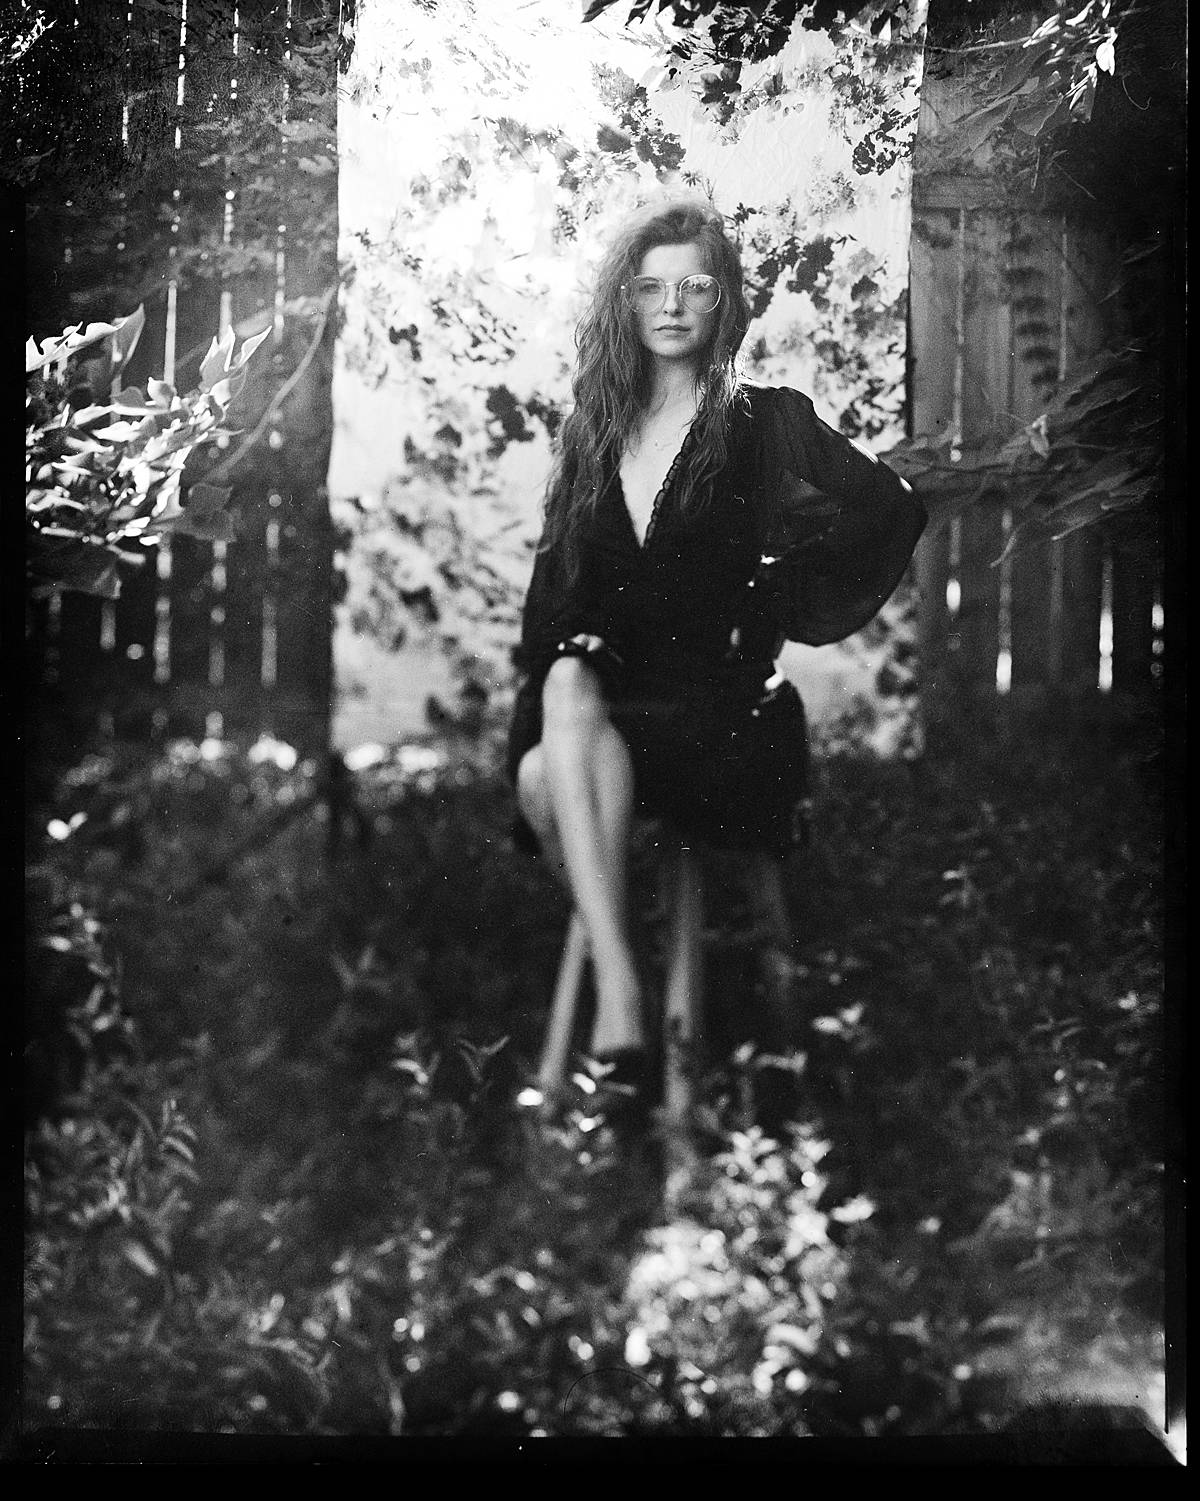 4x5 film portrait on expired kodak film of model in black dress by charleston portrait photographer brian d smith